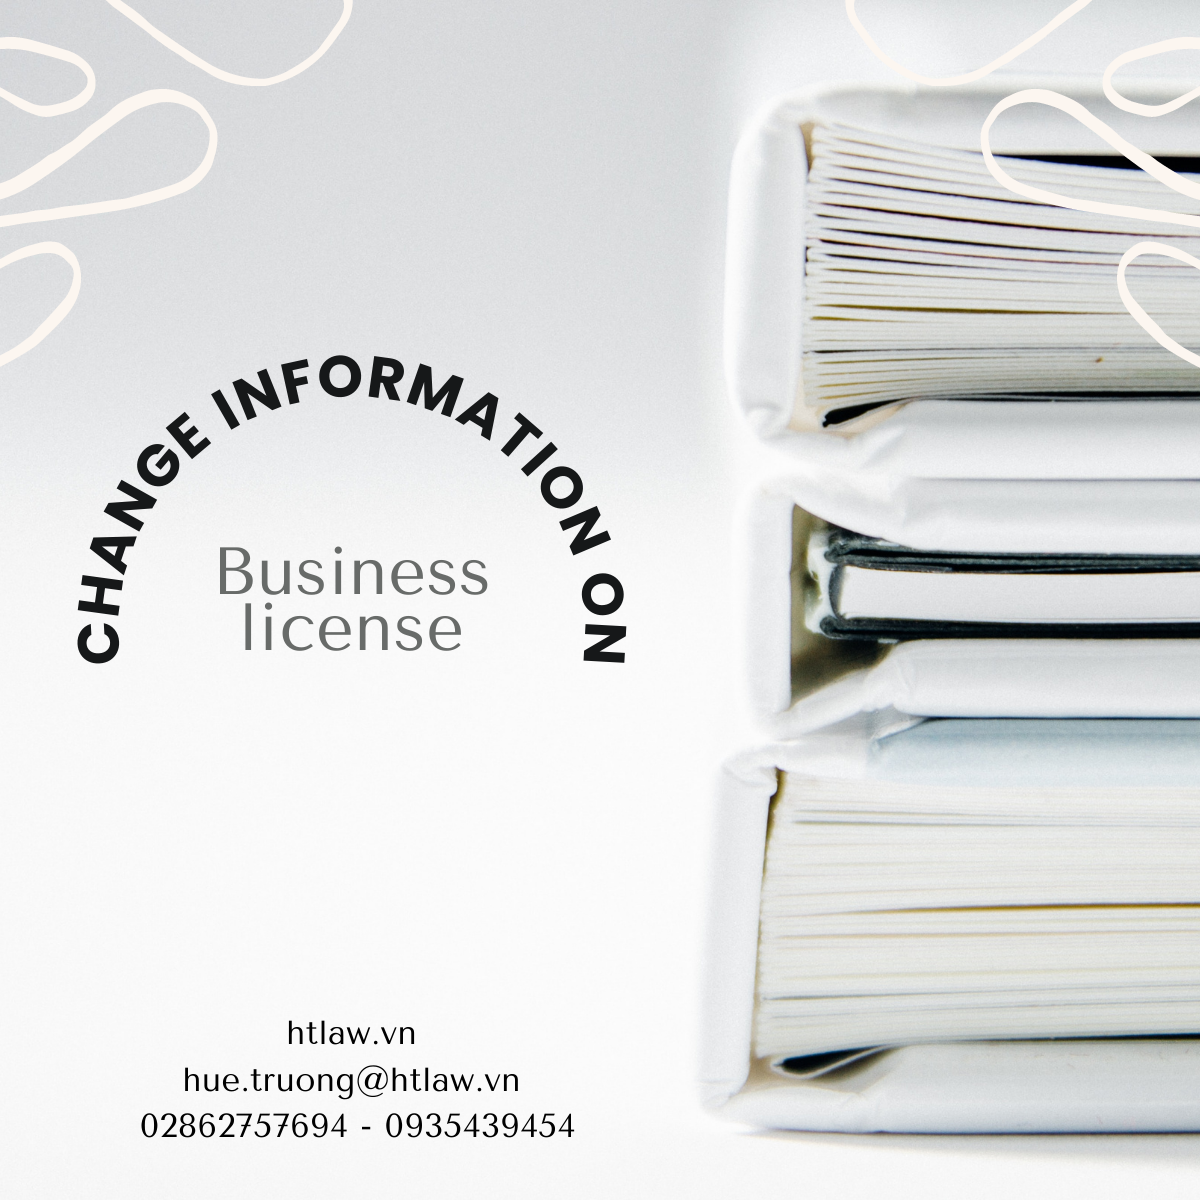 change information on business license -htlaw